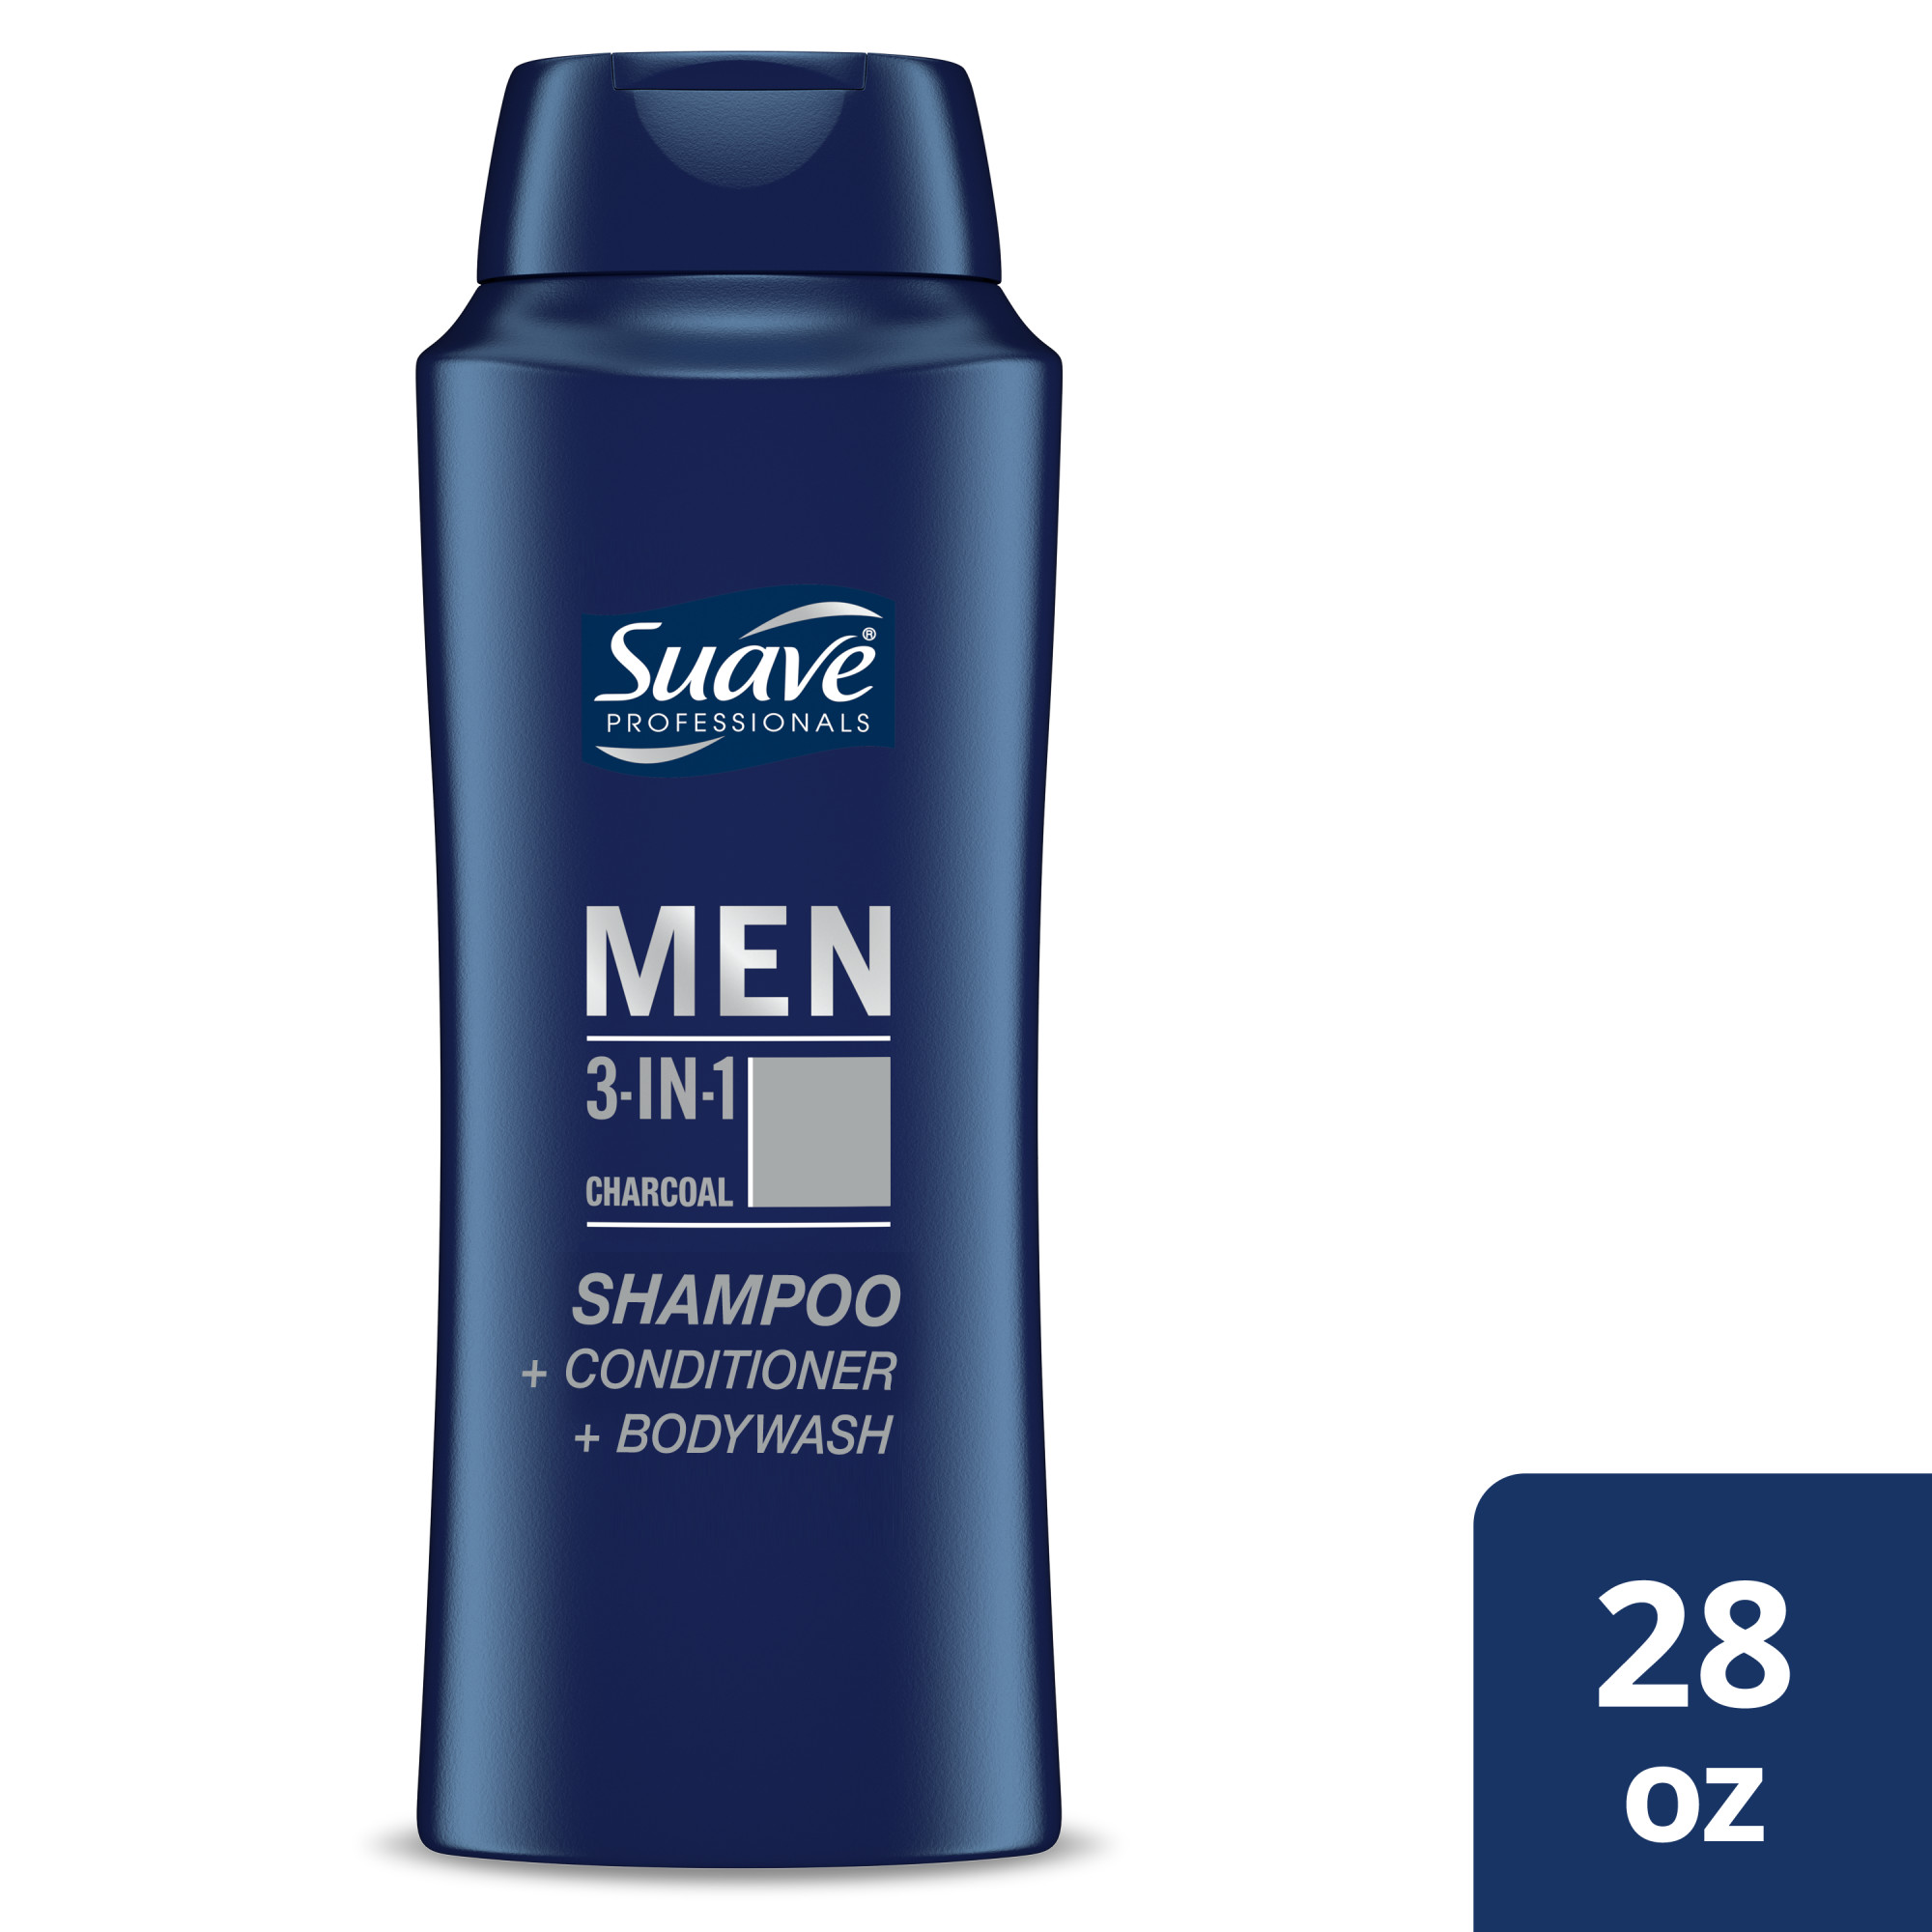 Suave Professionals Men 3-in-1 Shampoo, Conditioner & Body Wash, Charcoal, 28 fl oz - image 1 of 6